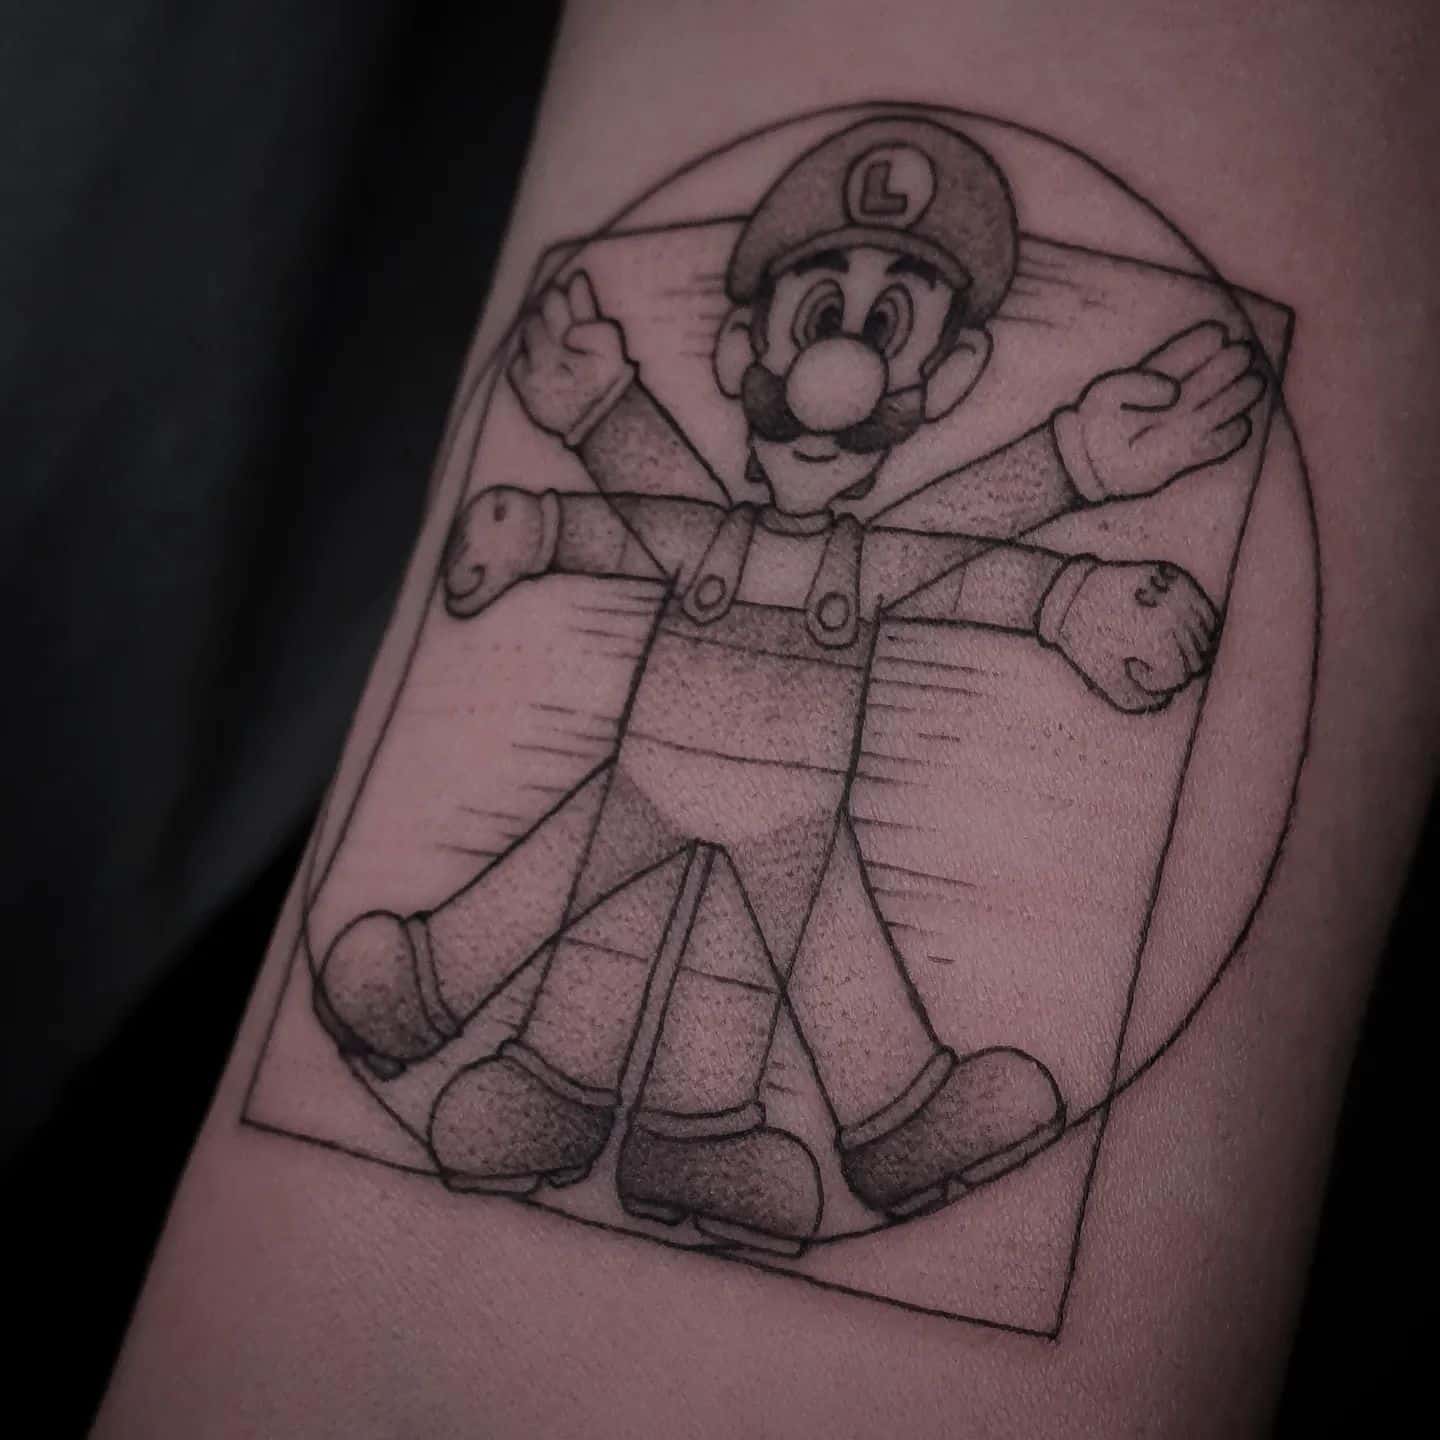 Mario tattoo by snip art